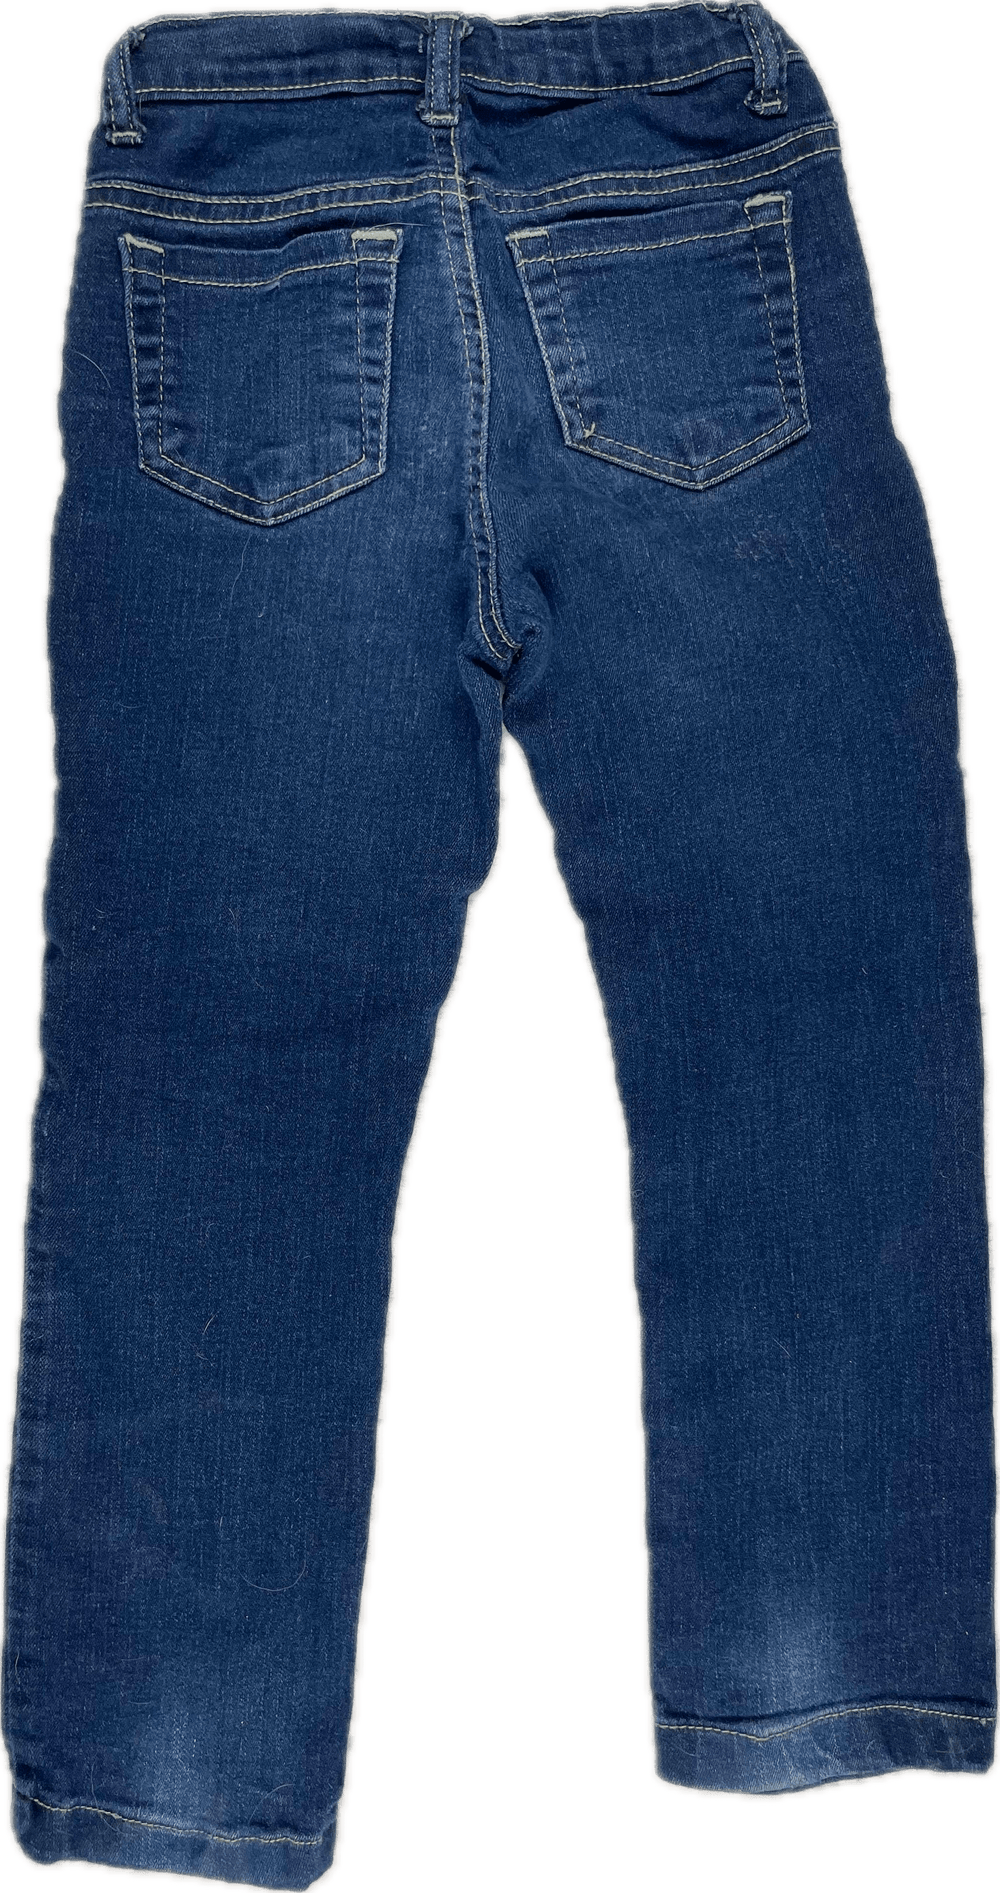 Pumpkin Patch Lightweight Straight Slim Denim Jeans - Size 5Y - Jean Pool